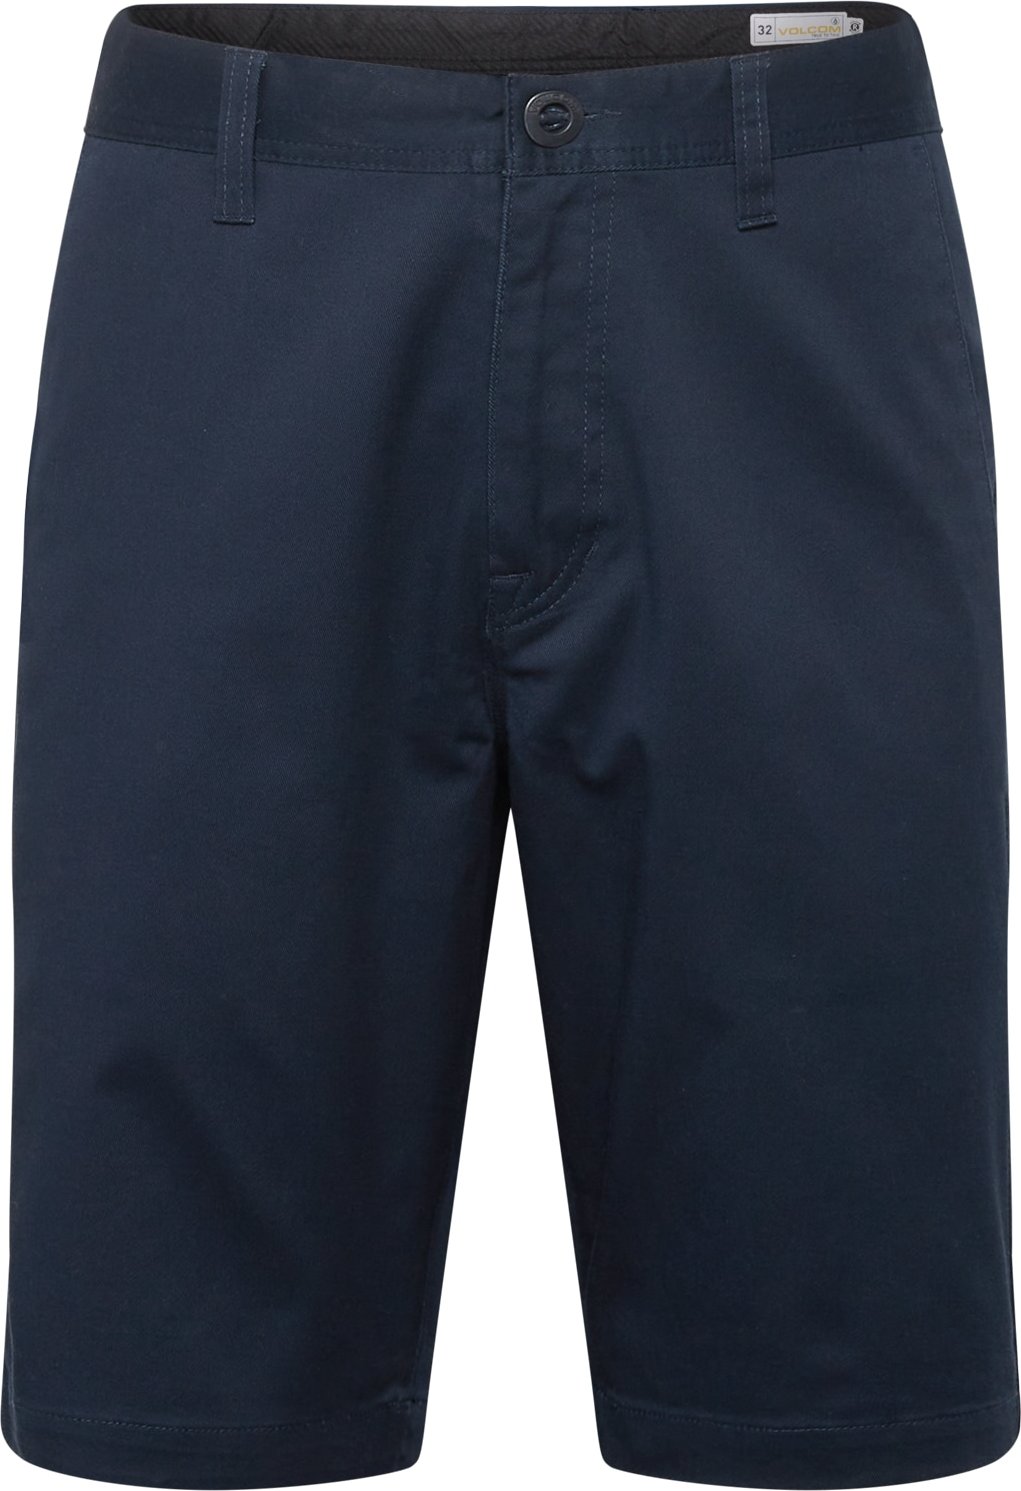 Volcom Chino kalhoty námořnická modř